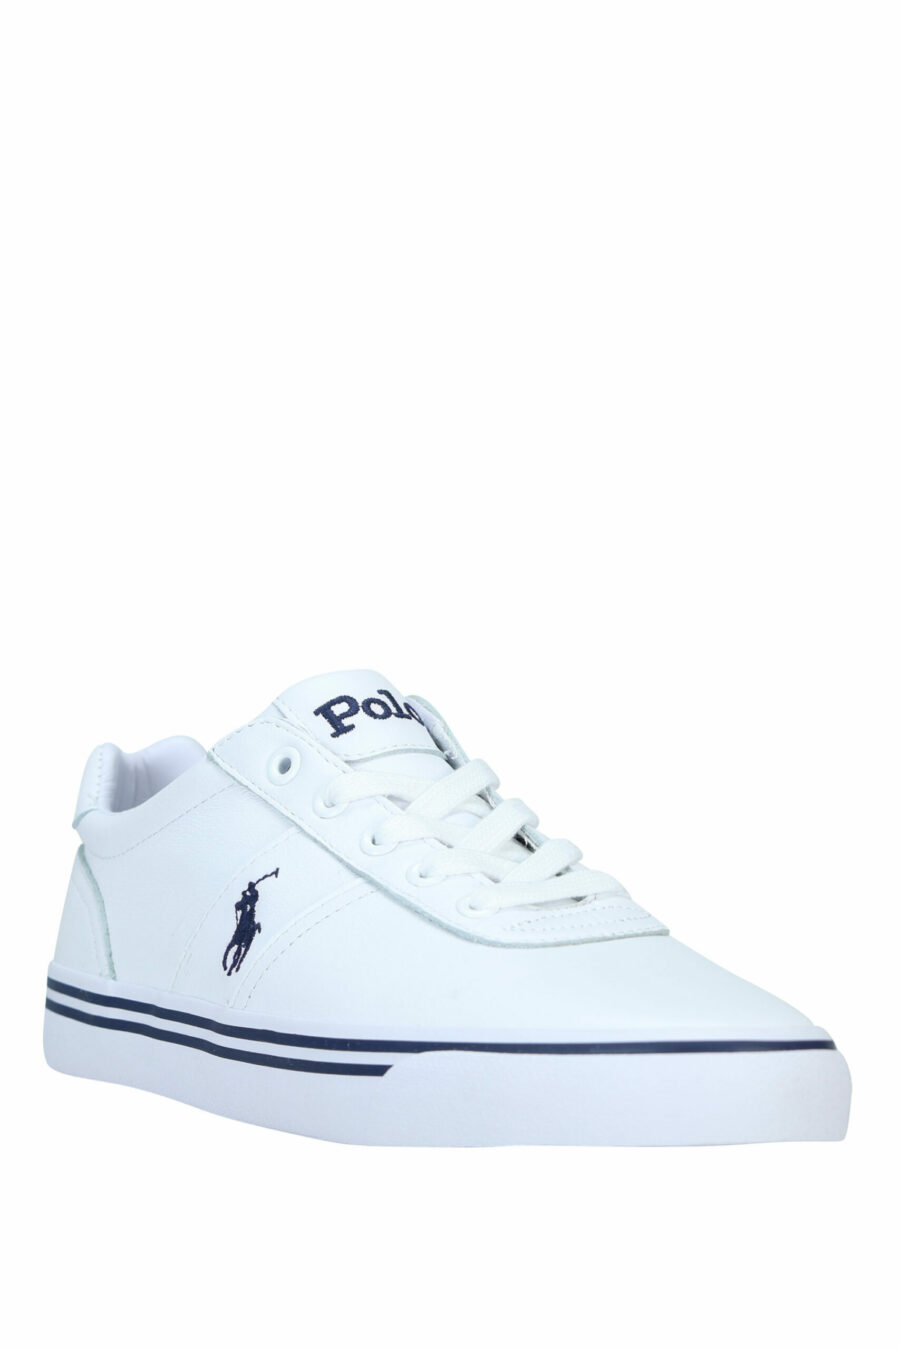 Zapatillas blancas con detalles azules y logo "polo" - 3615737560351 1 scaled